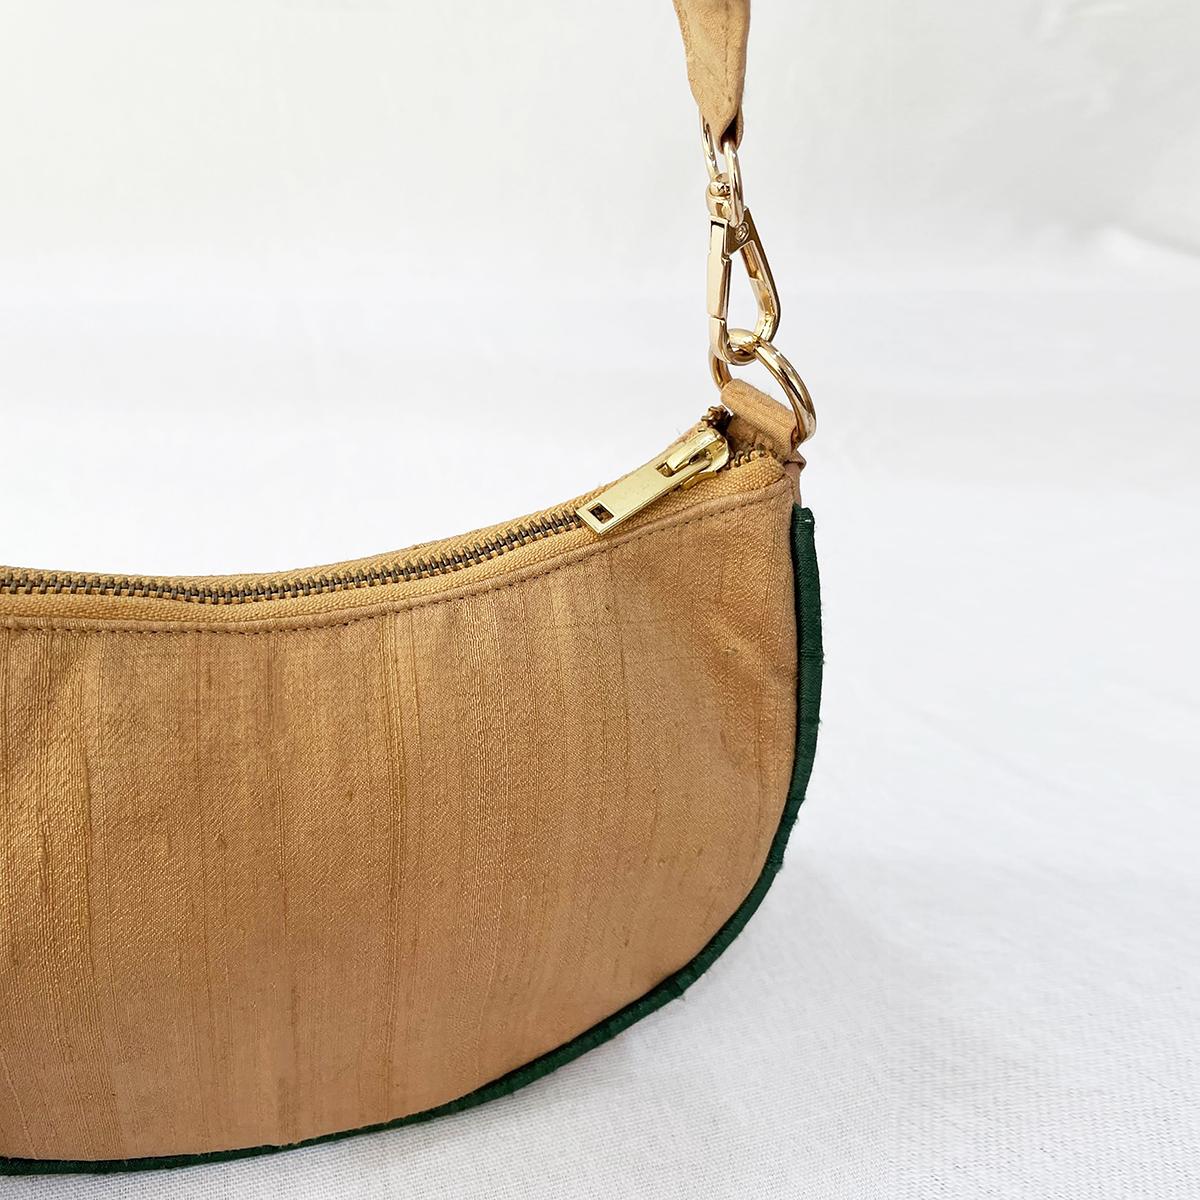 NWOT Dark Green / Olive Bam Zipper Crossbody Purse Convertable into  Backpack | eBay